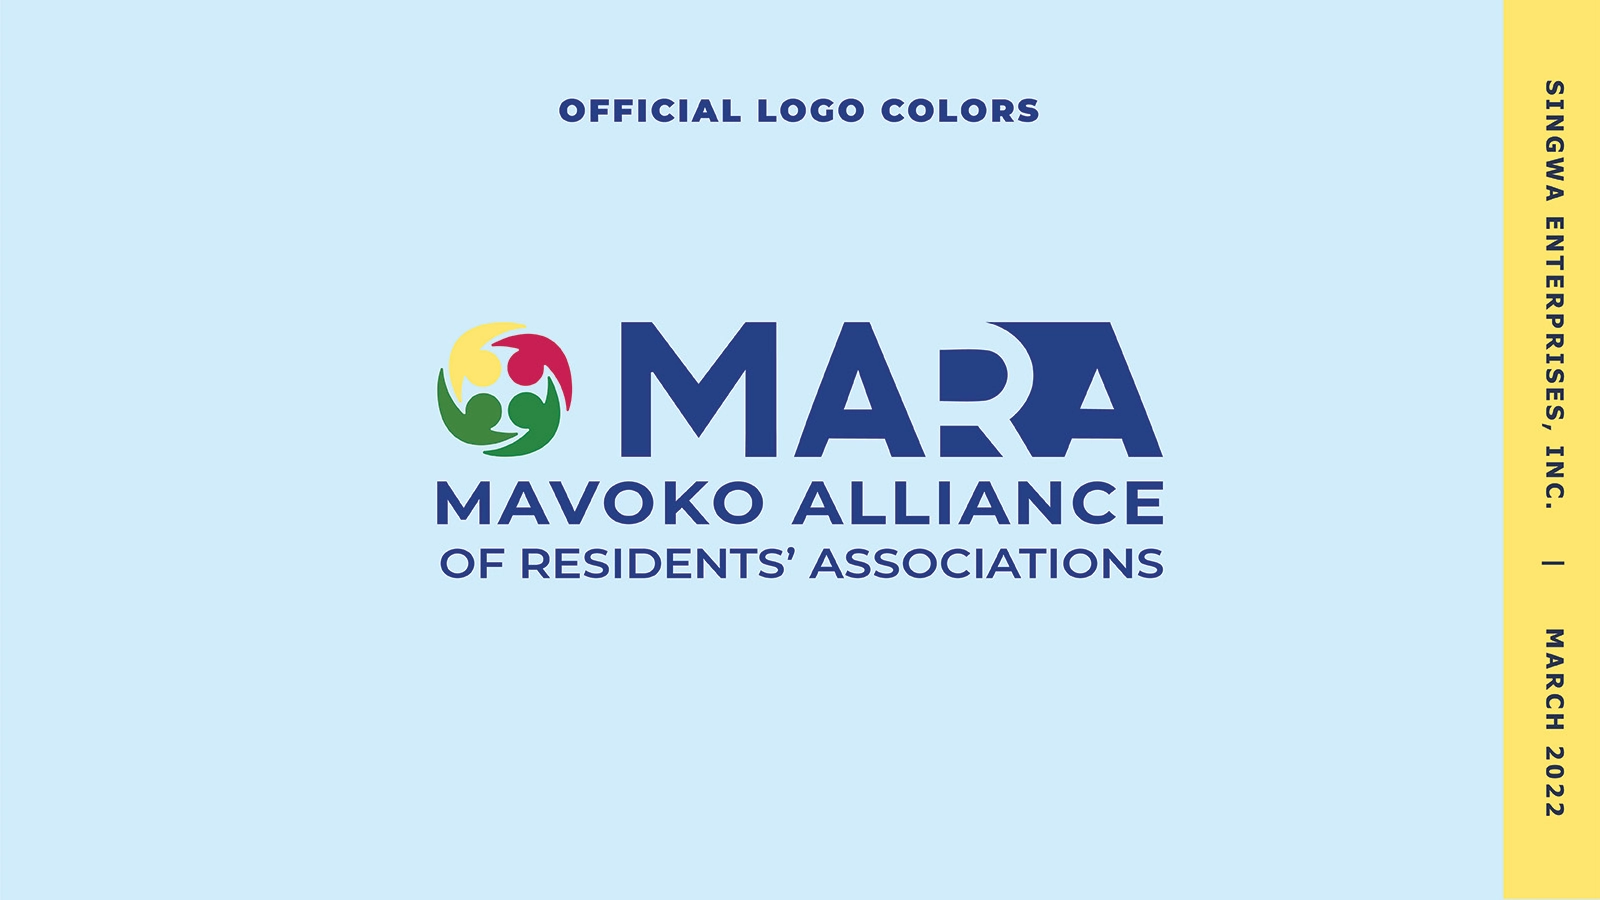 Mavoko Alliance of Residents Associations Official Logo Colors light 05